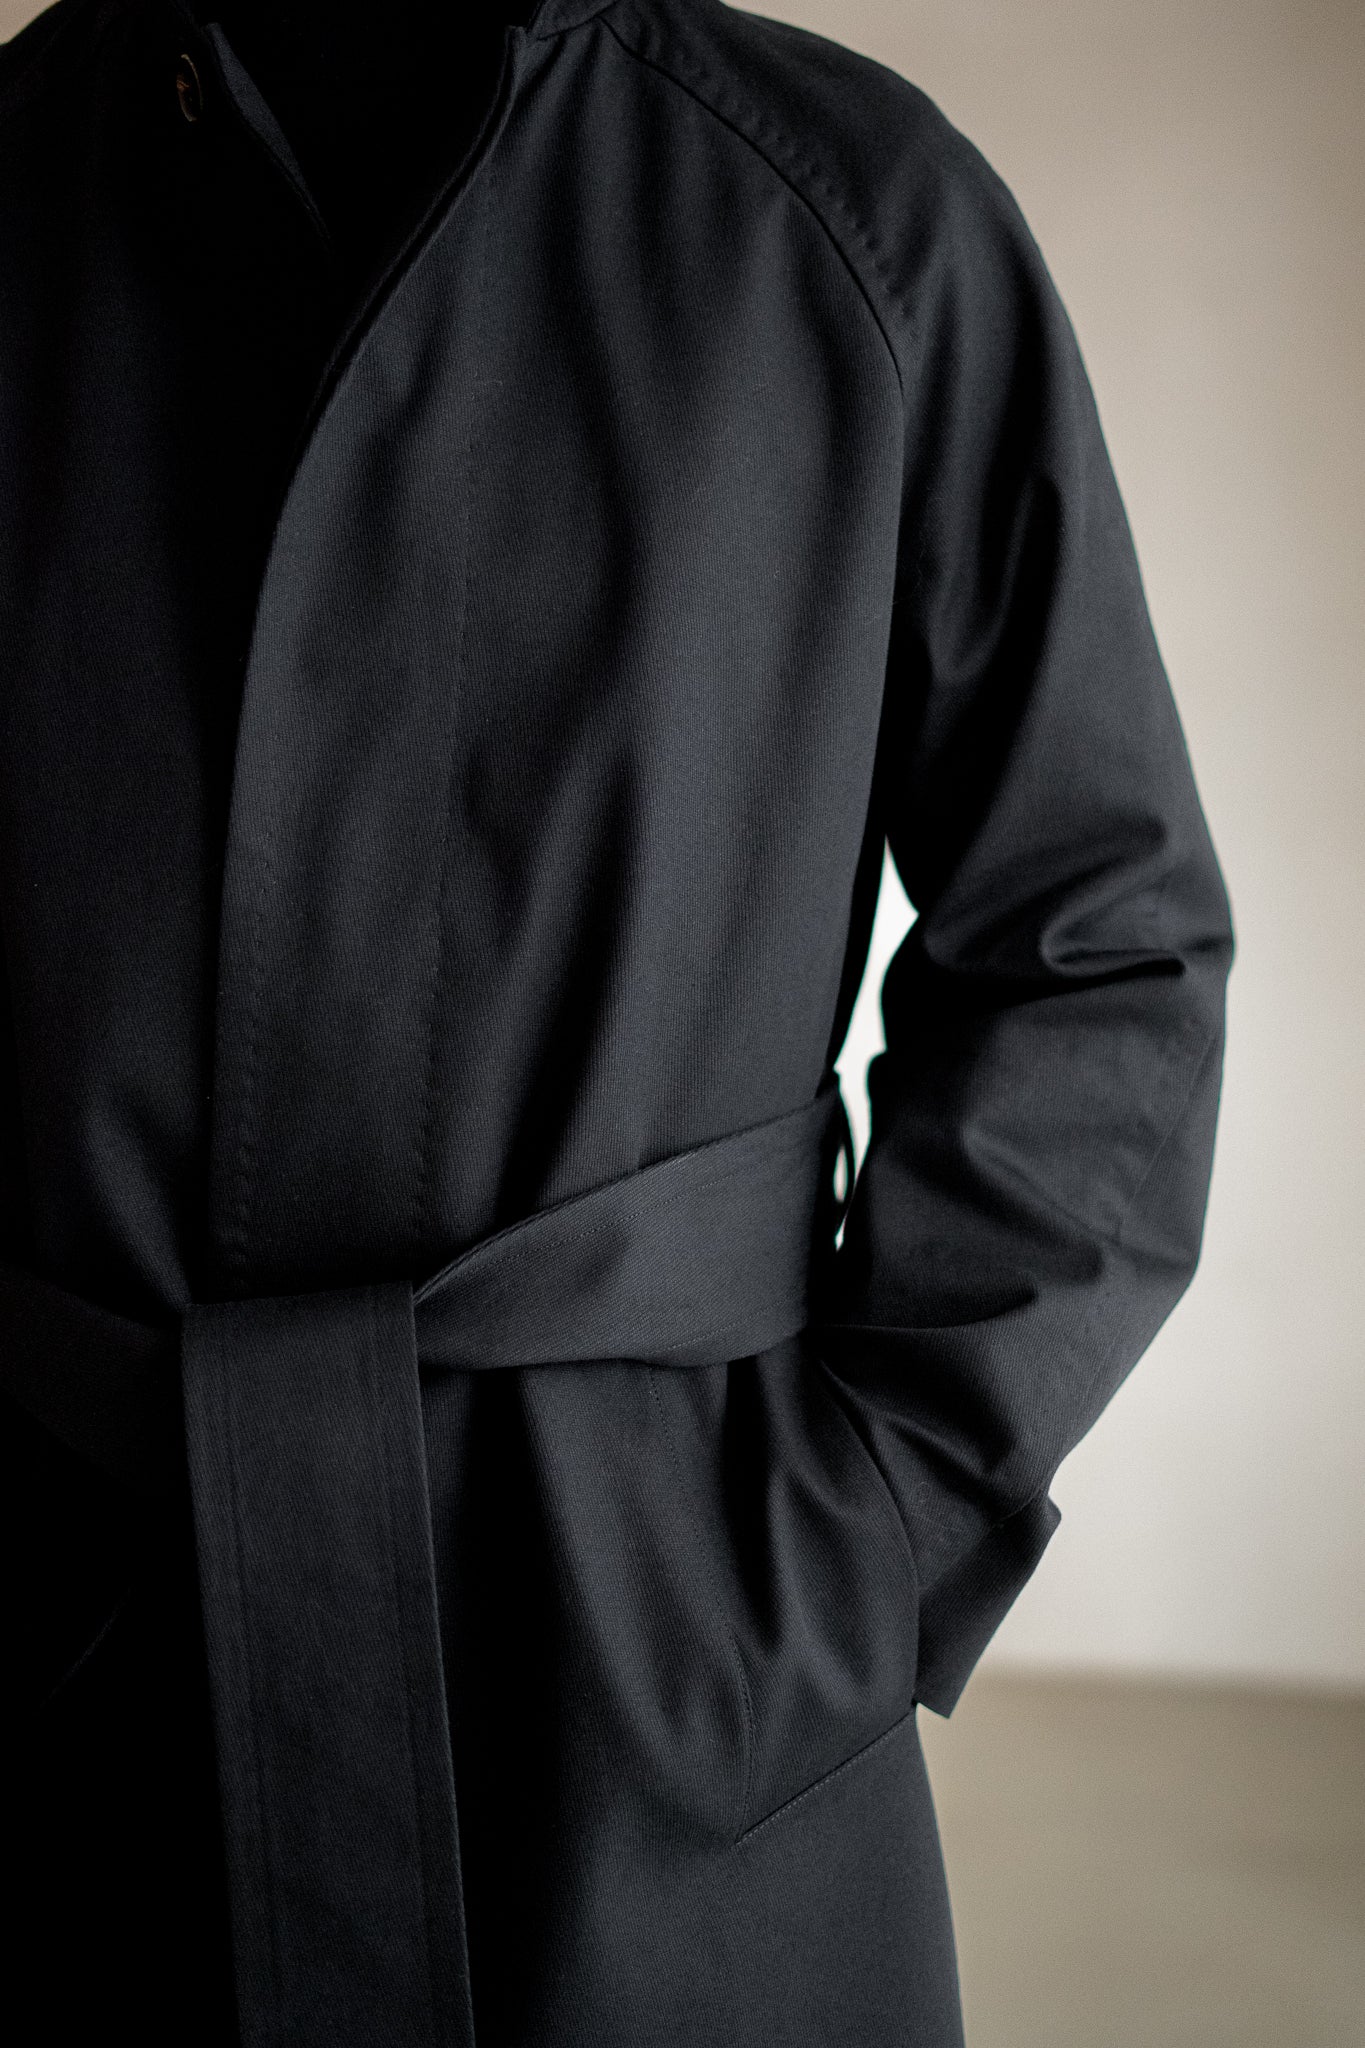 Split Raglan Black UK Cotton Overcoat